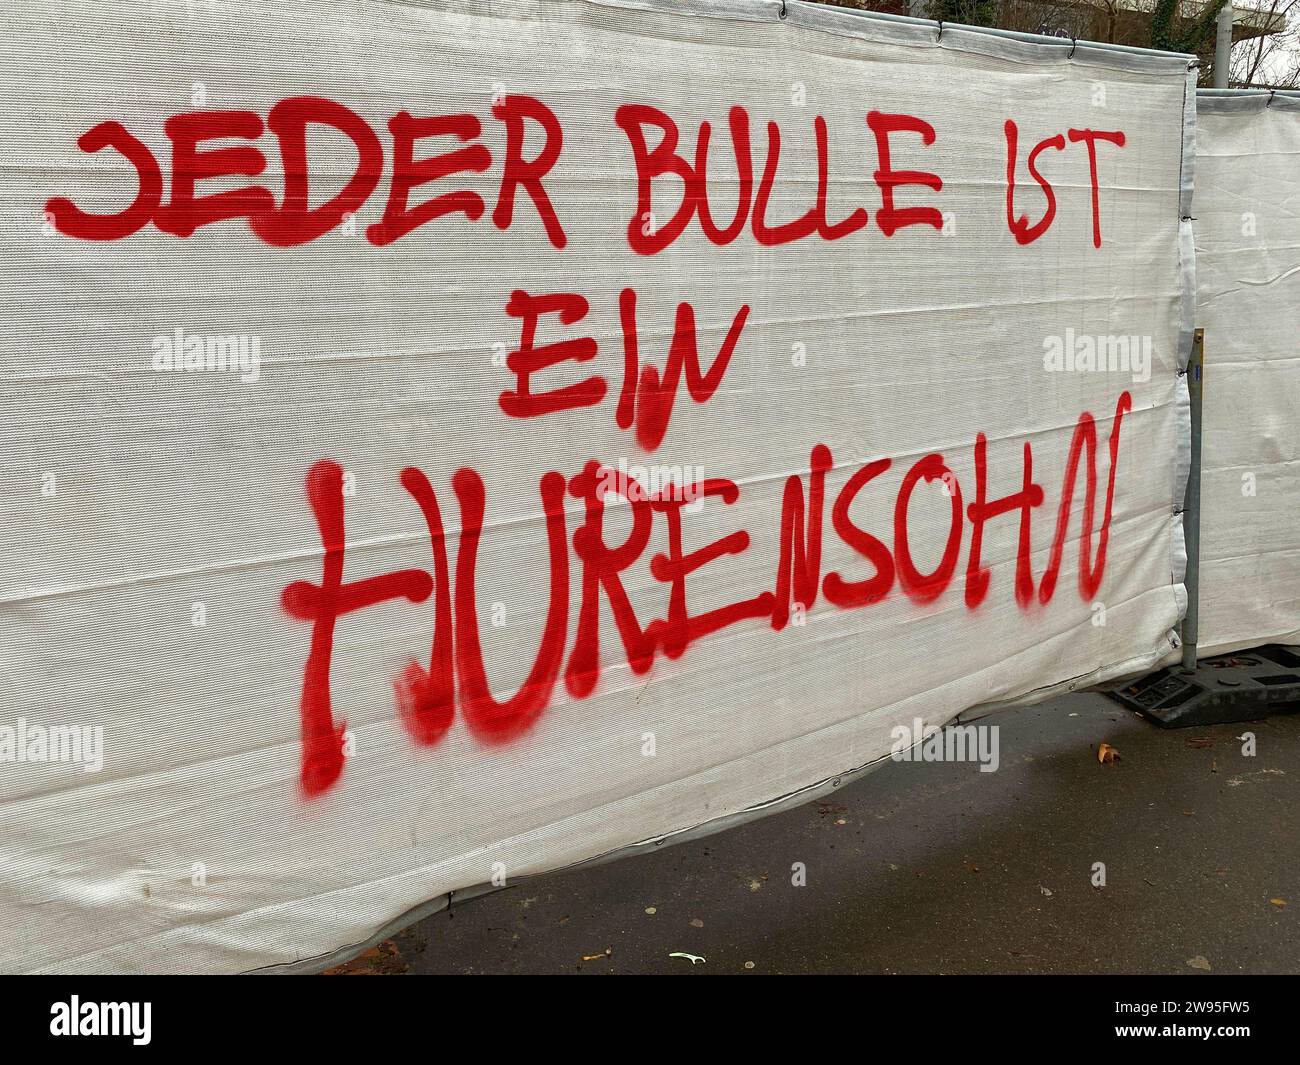 JEDER BULLE ist ein HURENSOHN, Hassrede, Hassrede, Slogan, Beleidigung, Graffiti am Bauzaun, rot, gegen Polizei, Bad-Cannstatt, Stuttgart Stockfoto